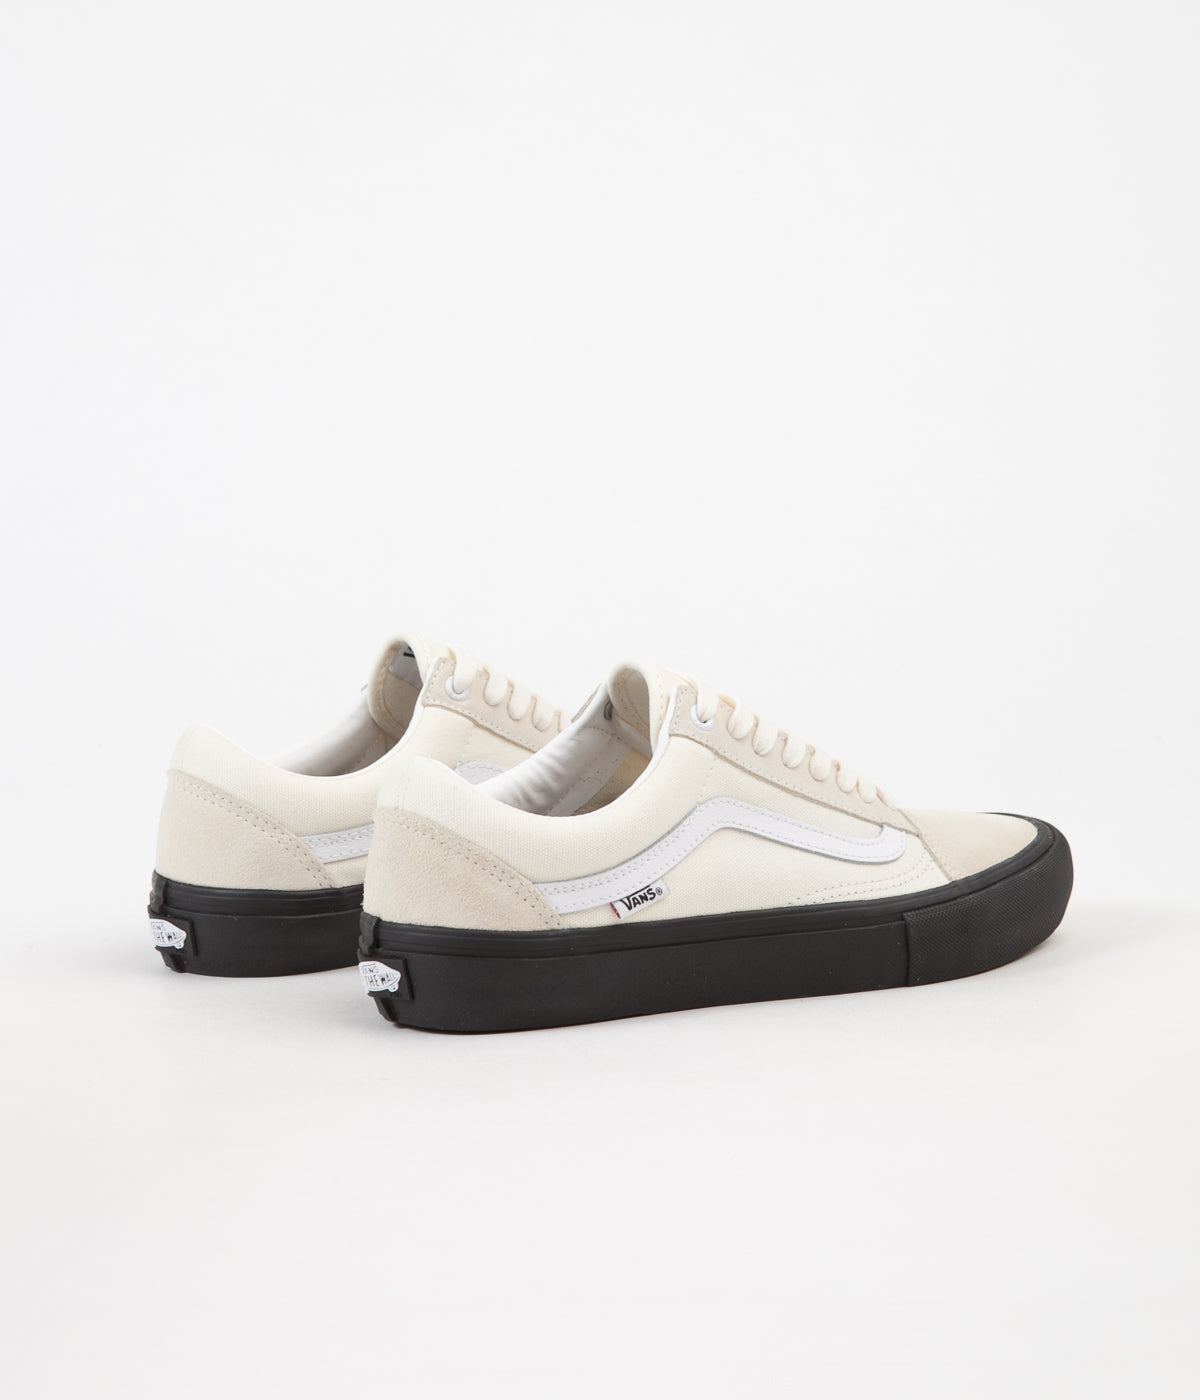 vans old skool pro classic white & black skate shoes